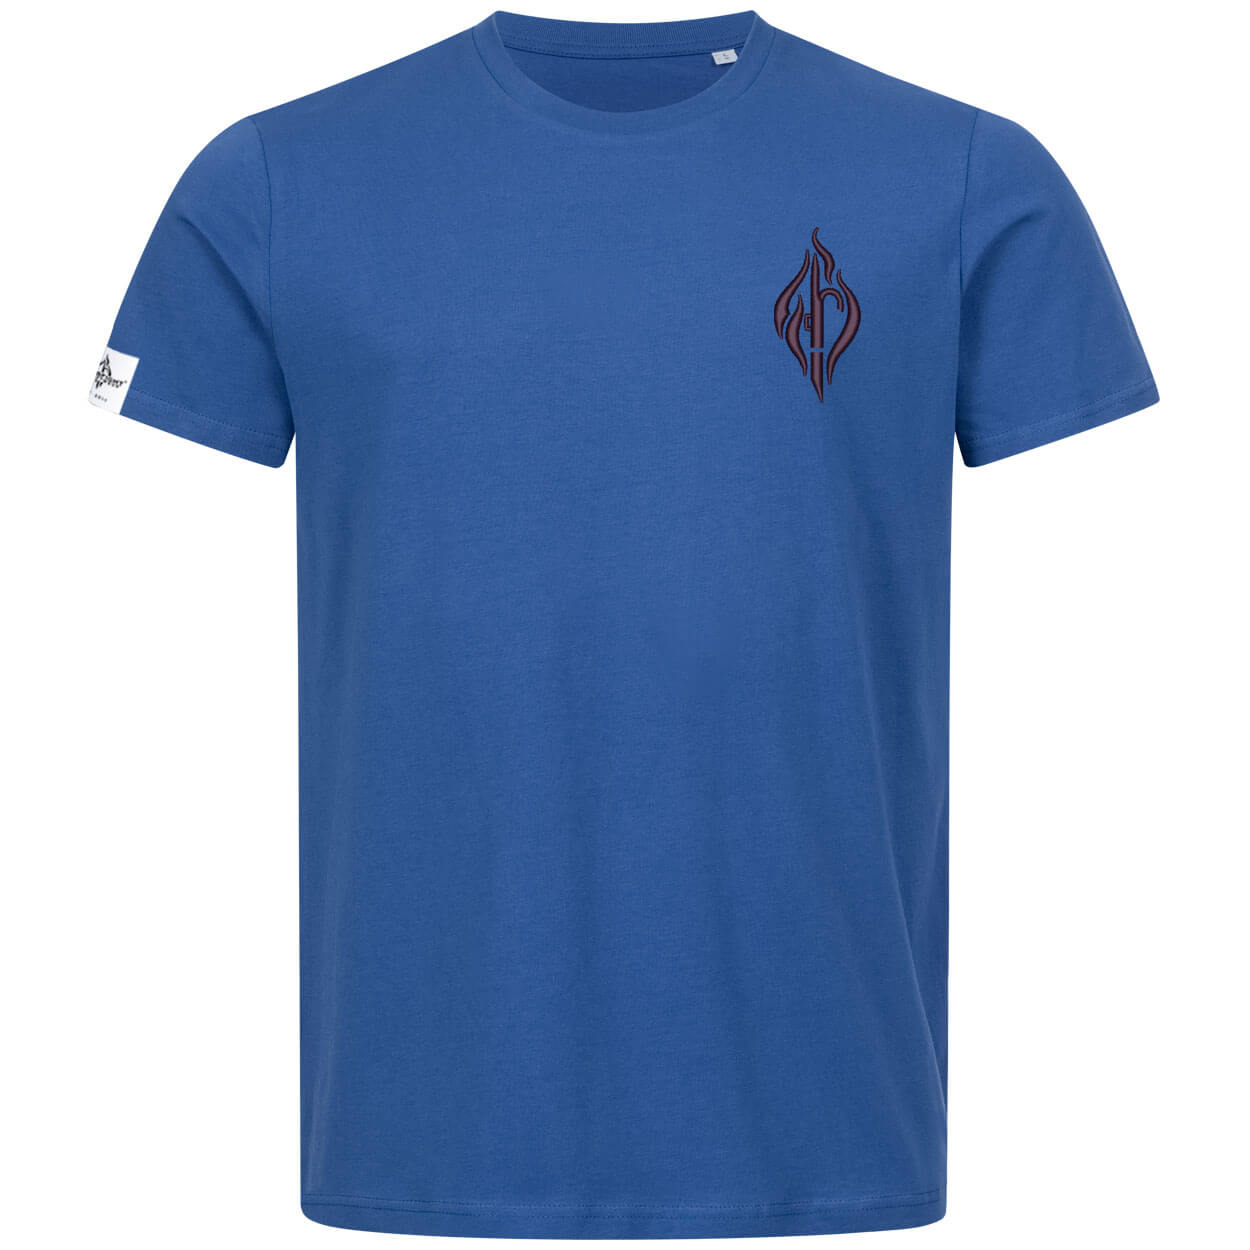 Fire & Hook - Basic Line Herren T-Shirt